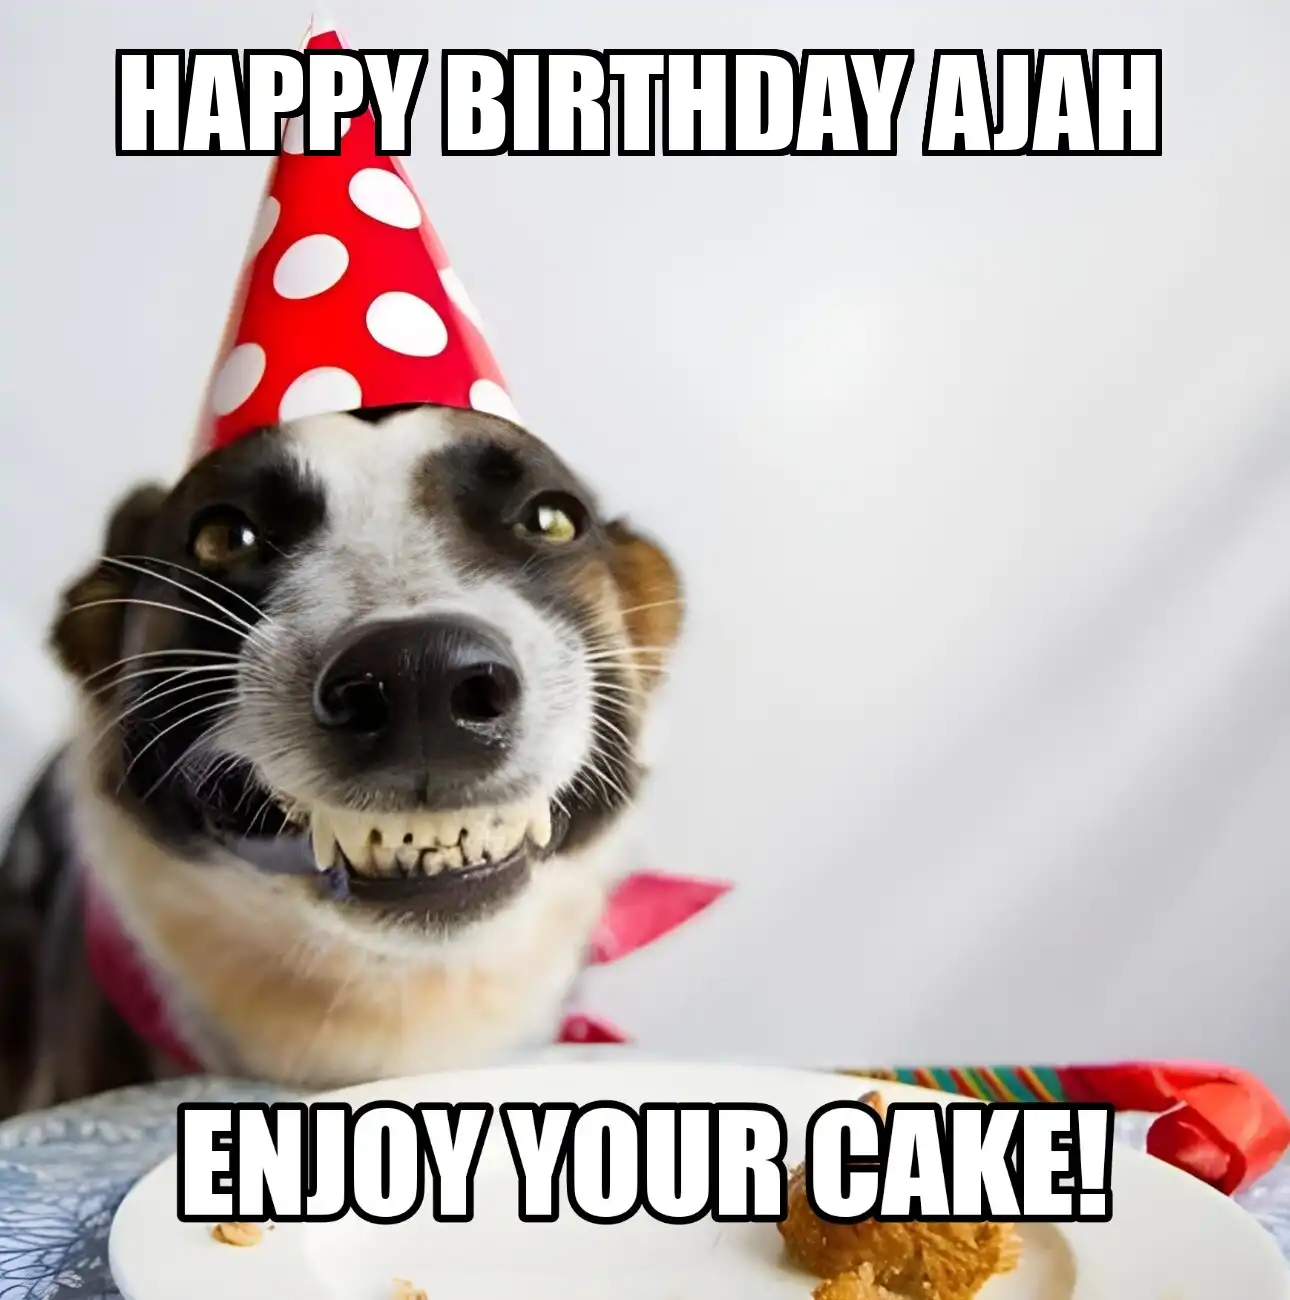 Happy Birthday Ajah Enjoy Your Cake Dog Meme